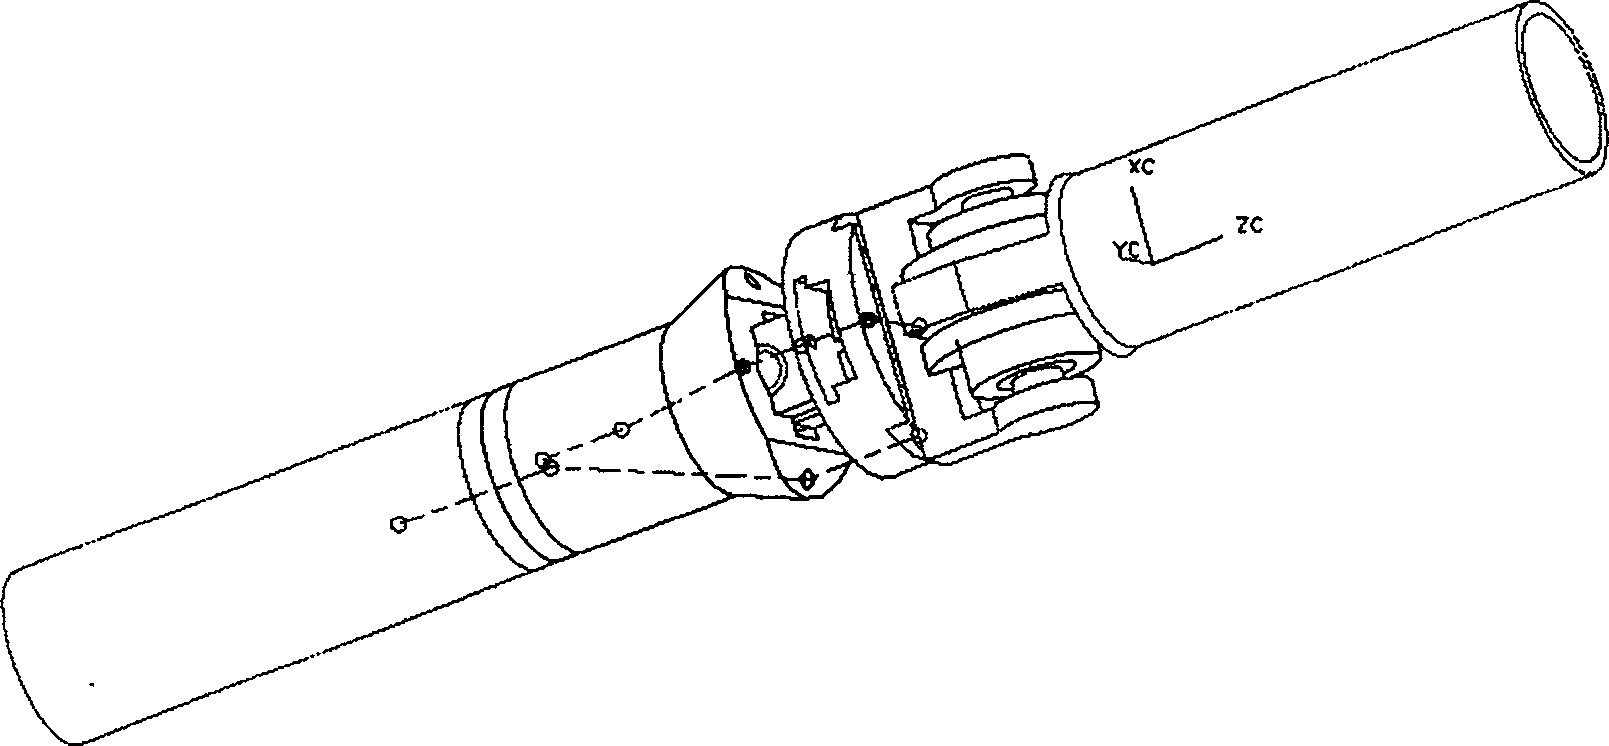 4-DOF dummy model knee-joint mechanism for body bump protection test